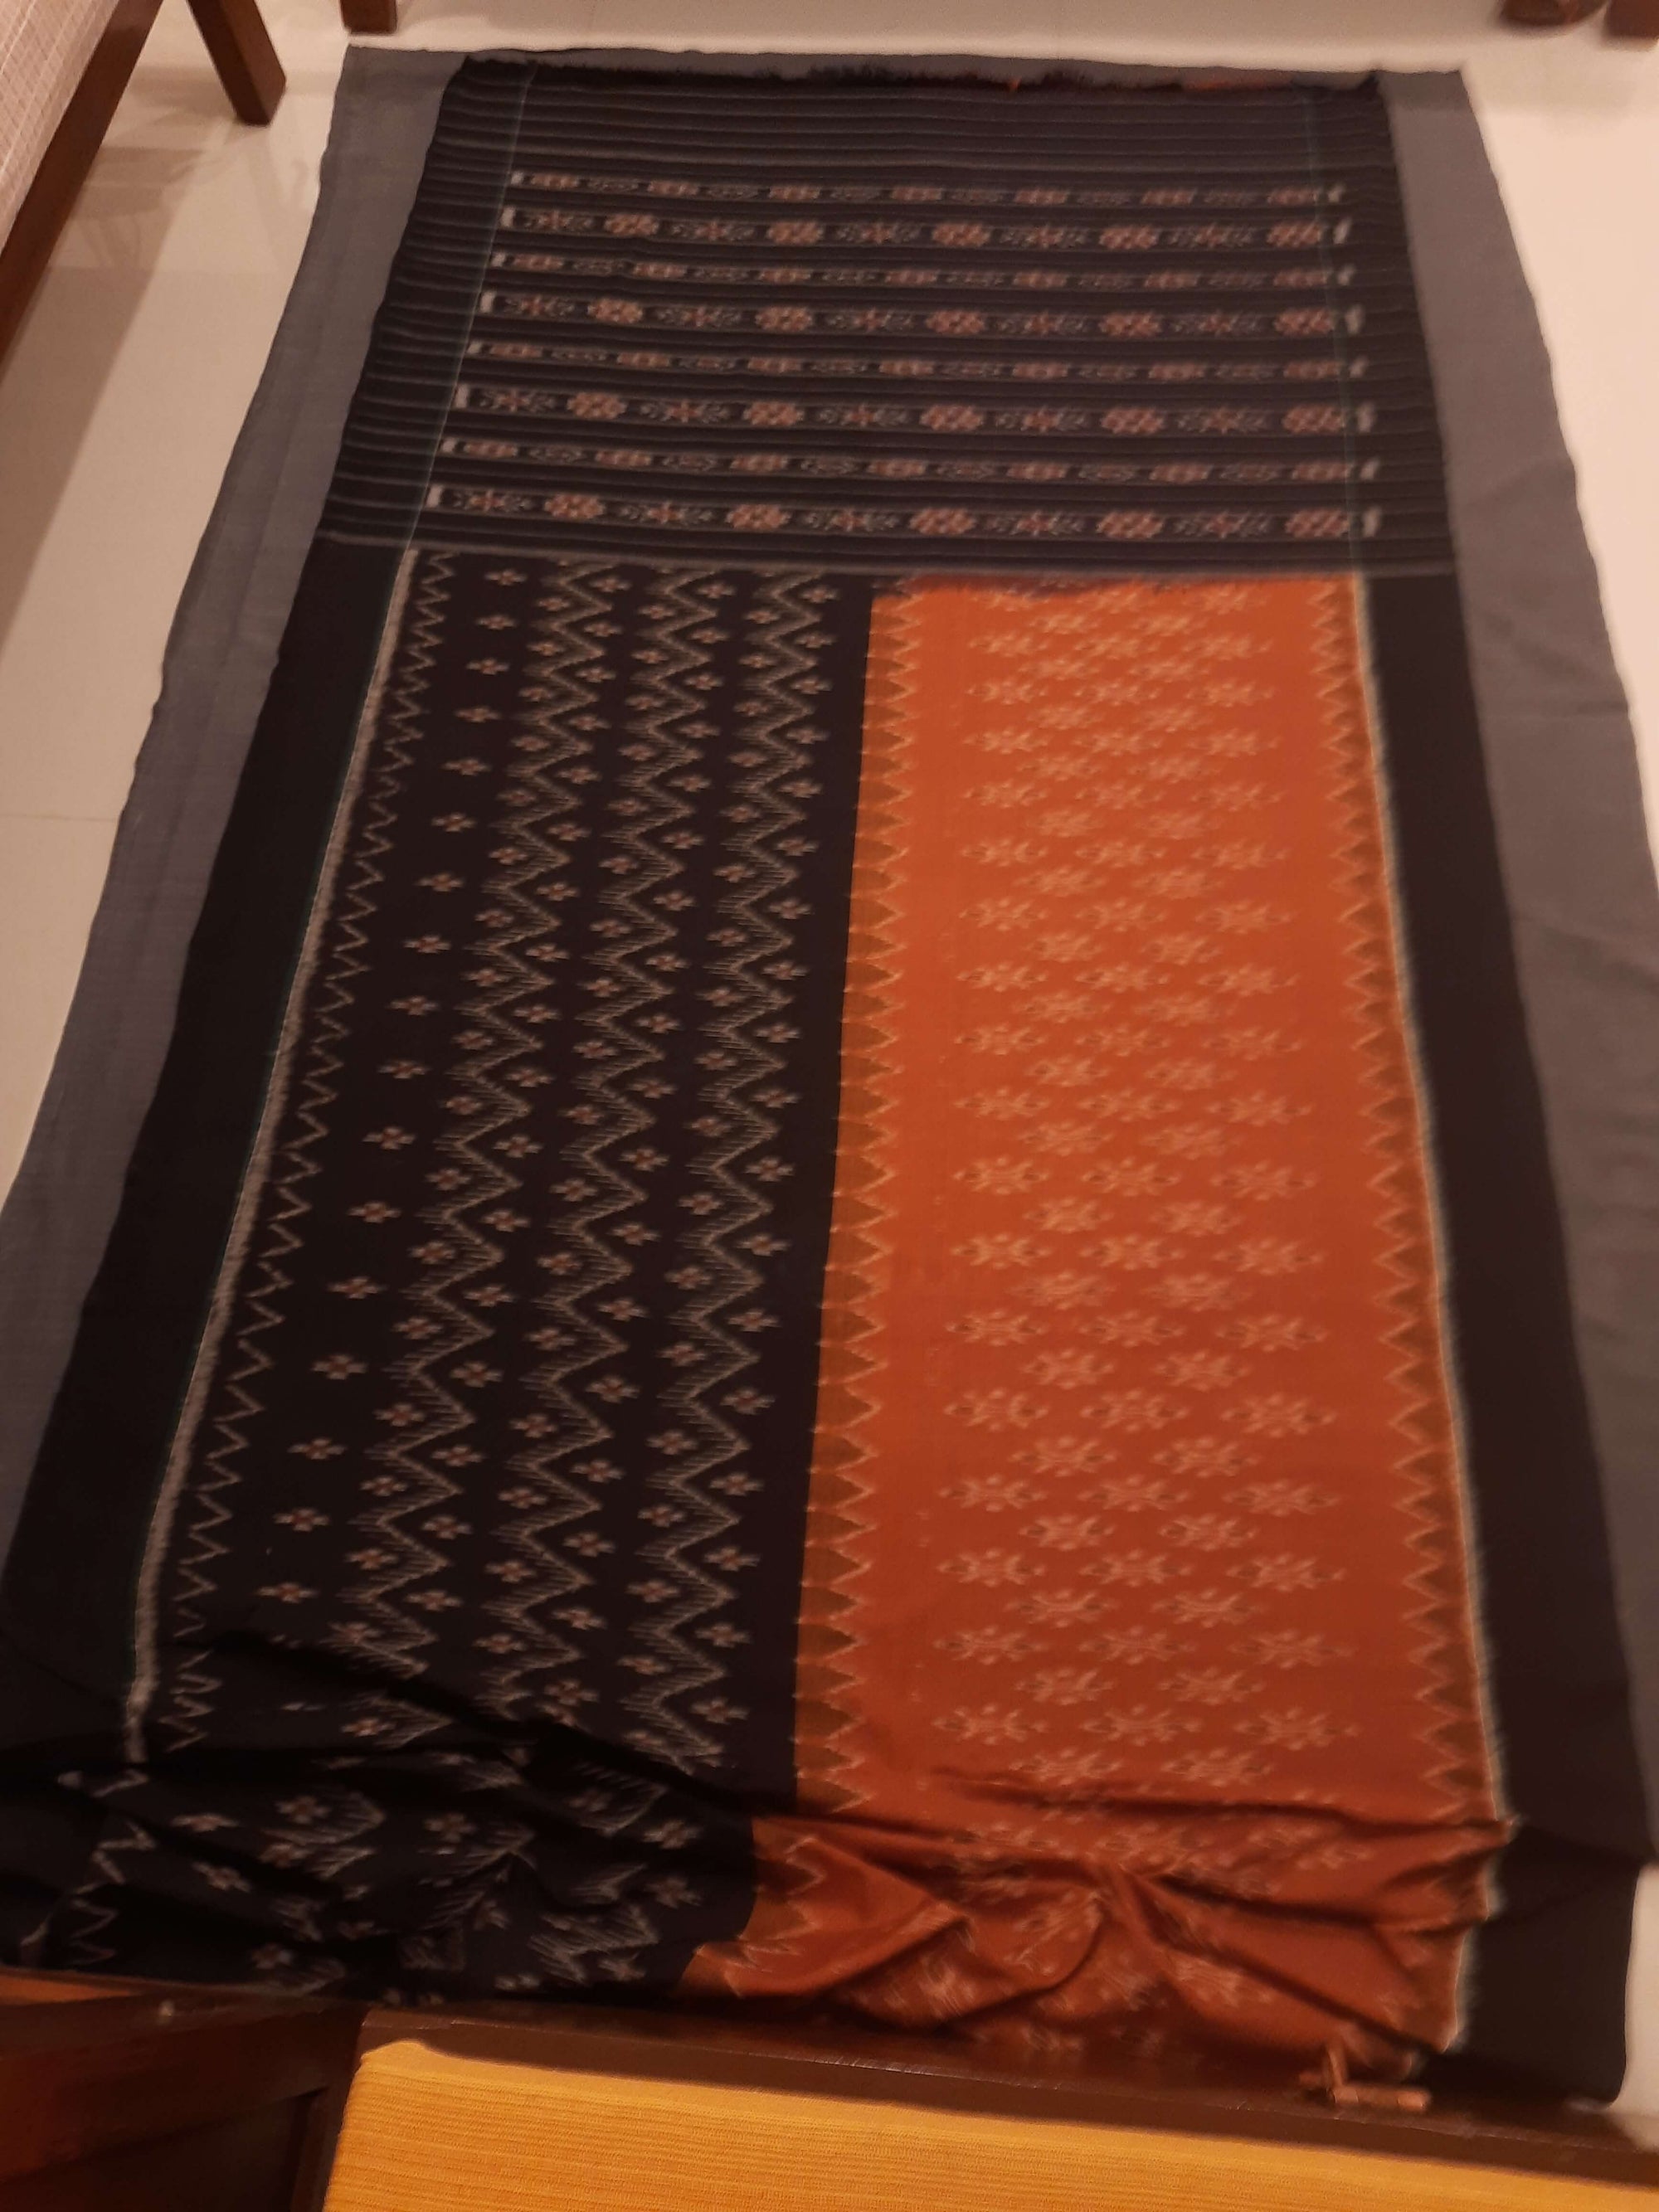 Rust and Black half half Cotton Odisha Ikat saree with sambalpuri ikat blouse piece